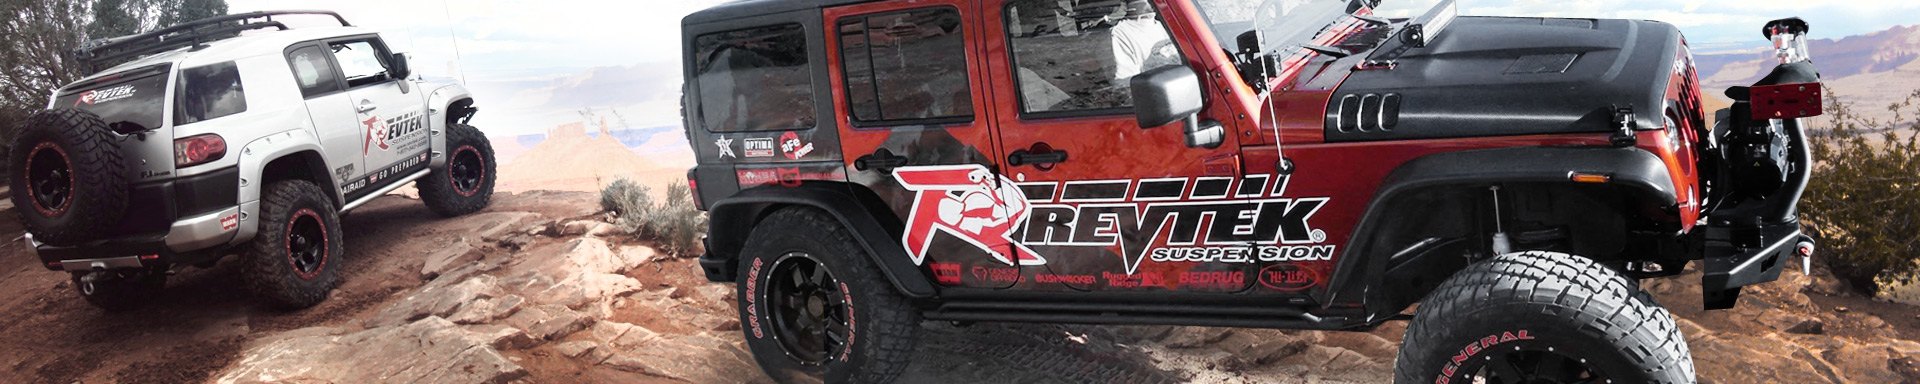 Revtek Driveline & Axles